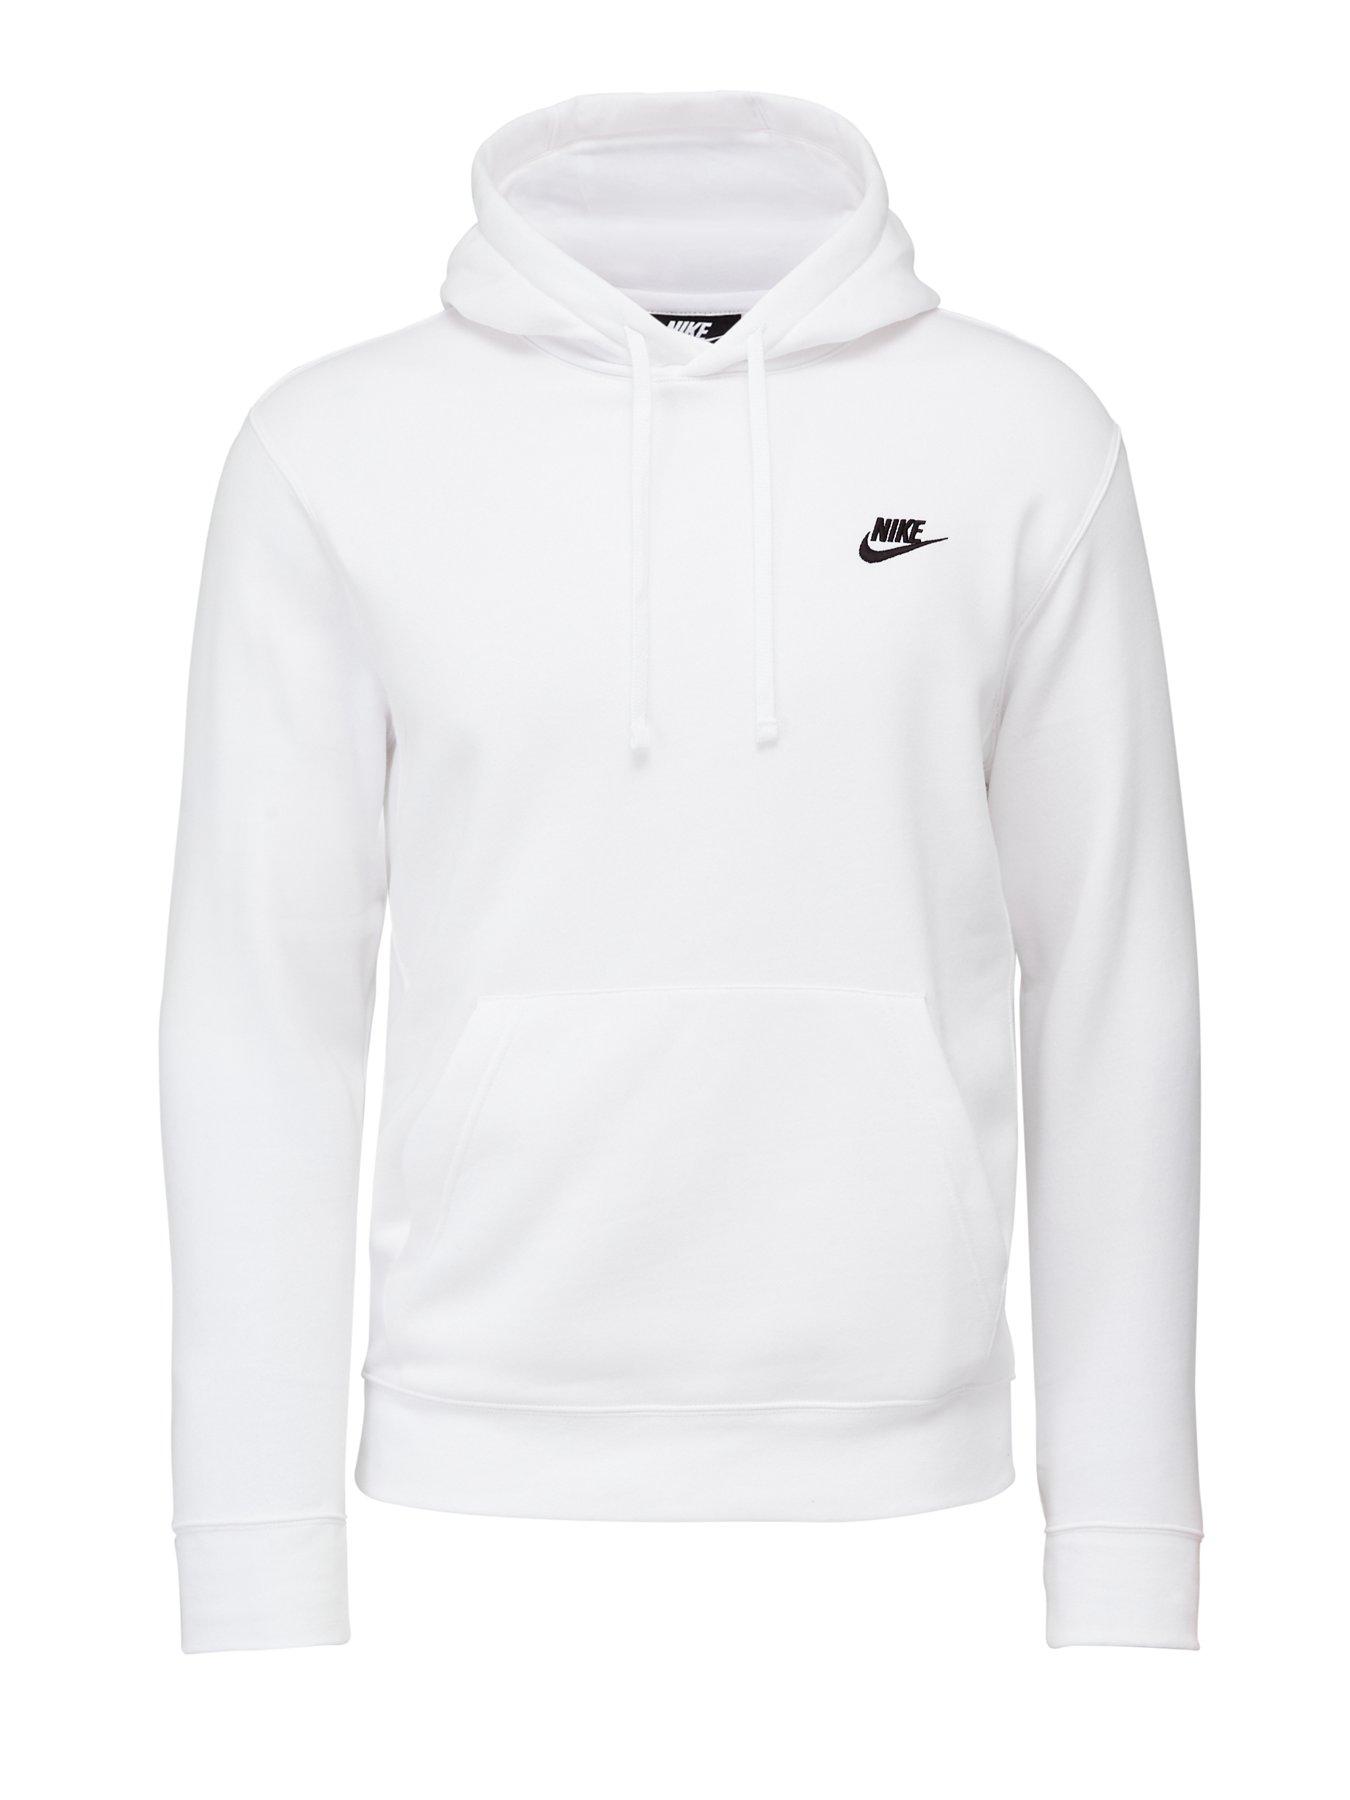 nike fleece white hoodie